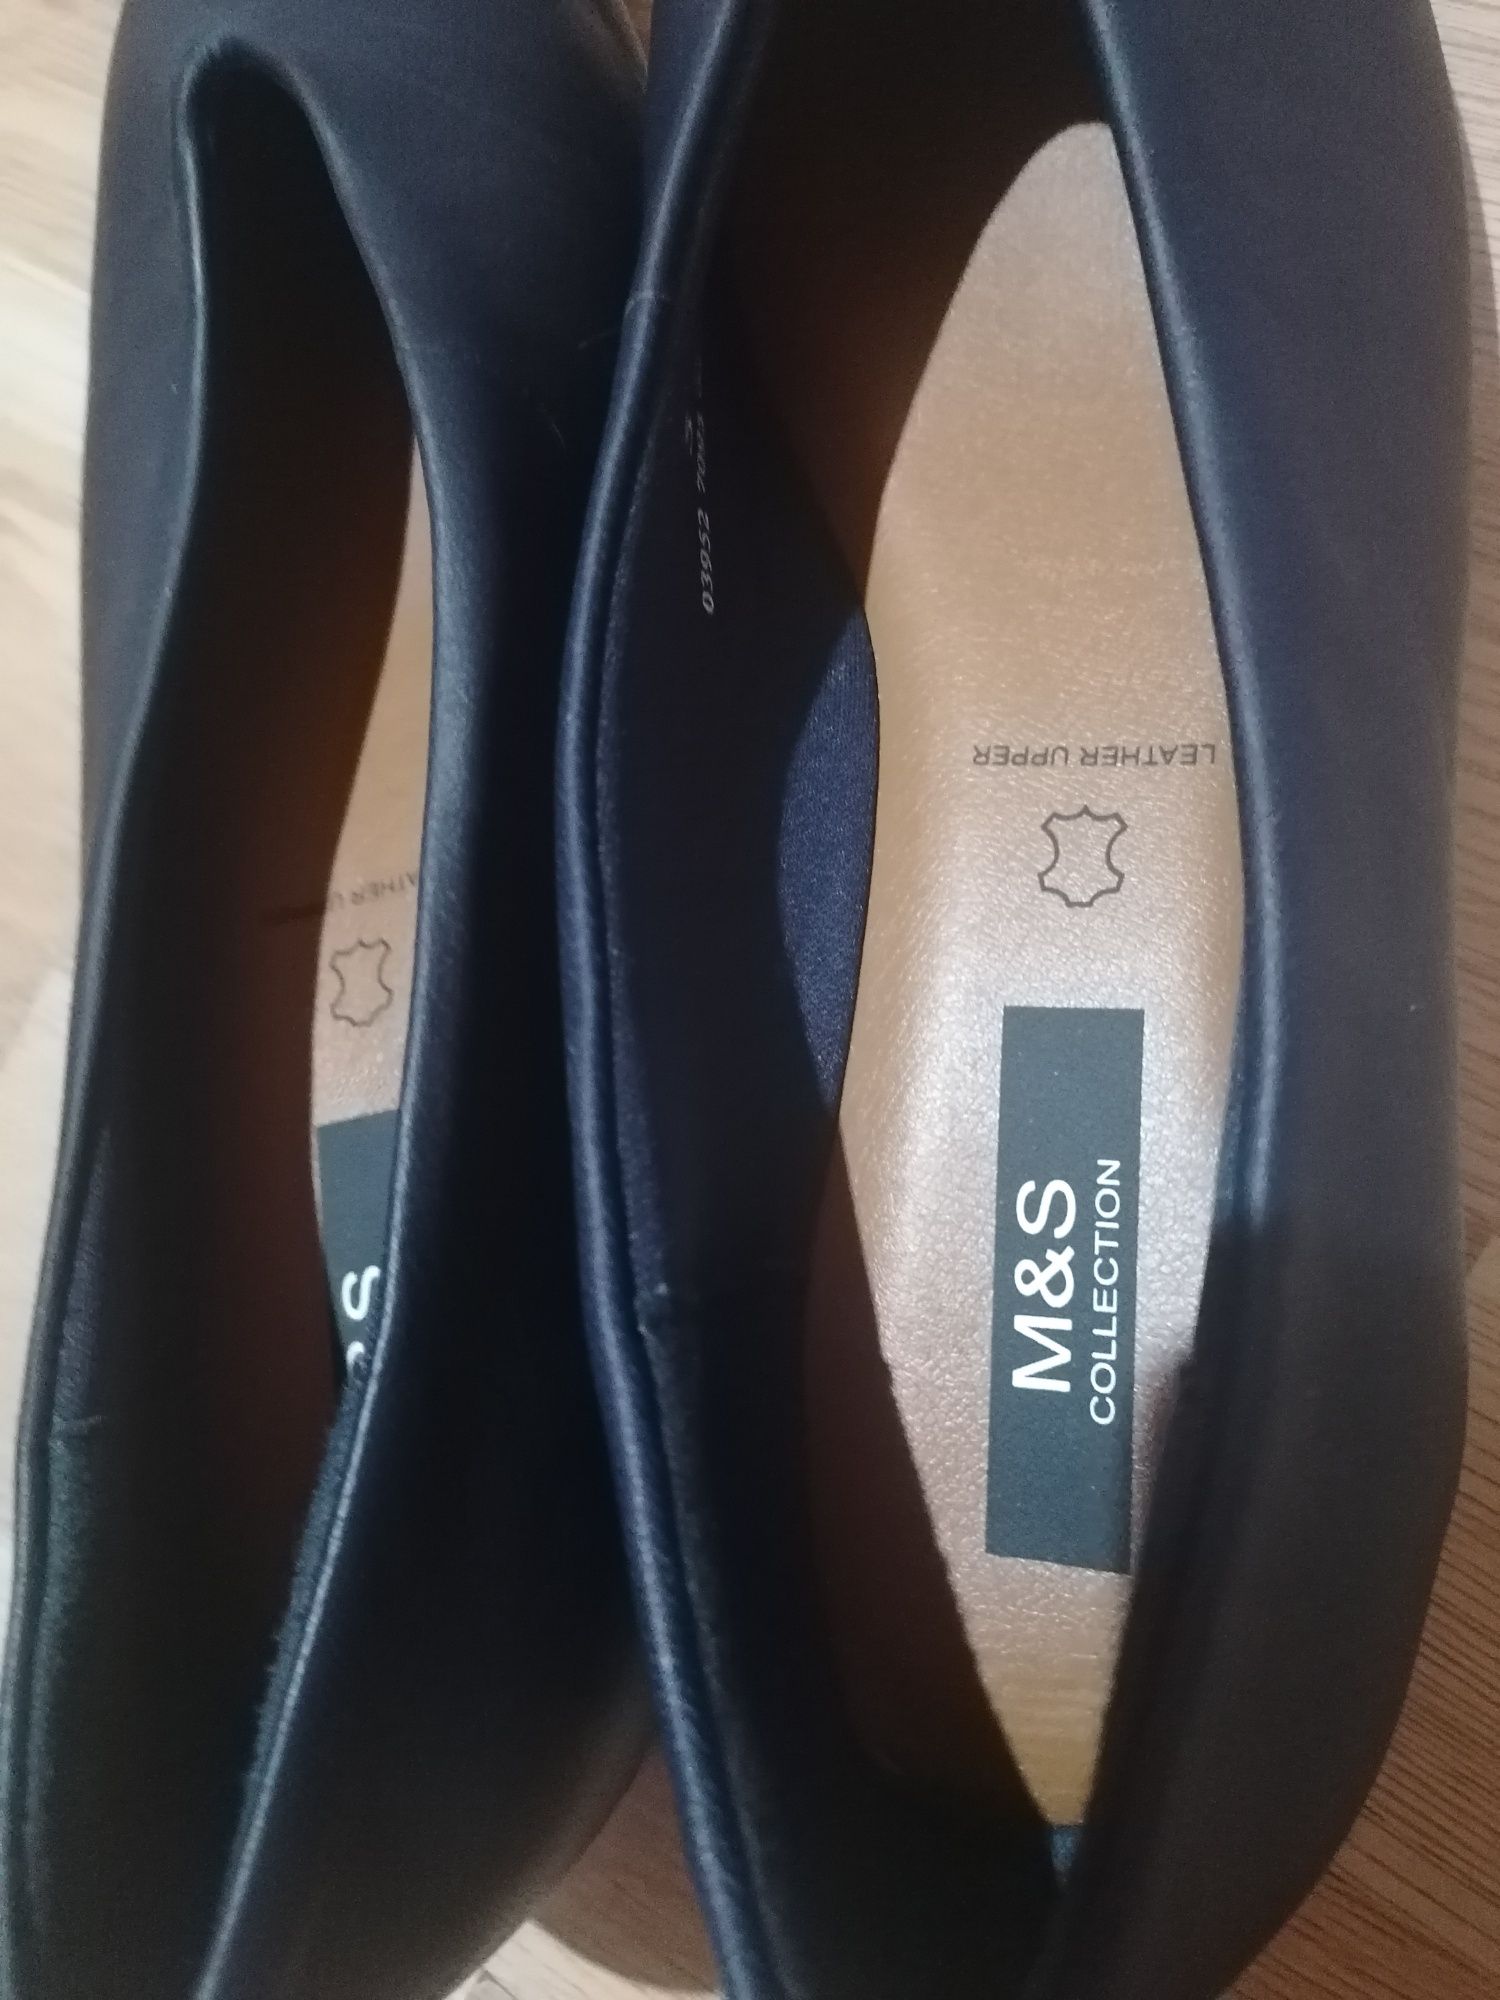 Дамски обувки M&S естествена кожа